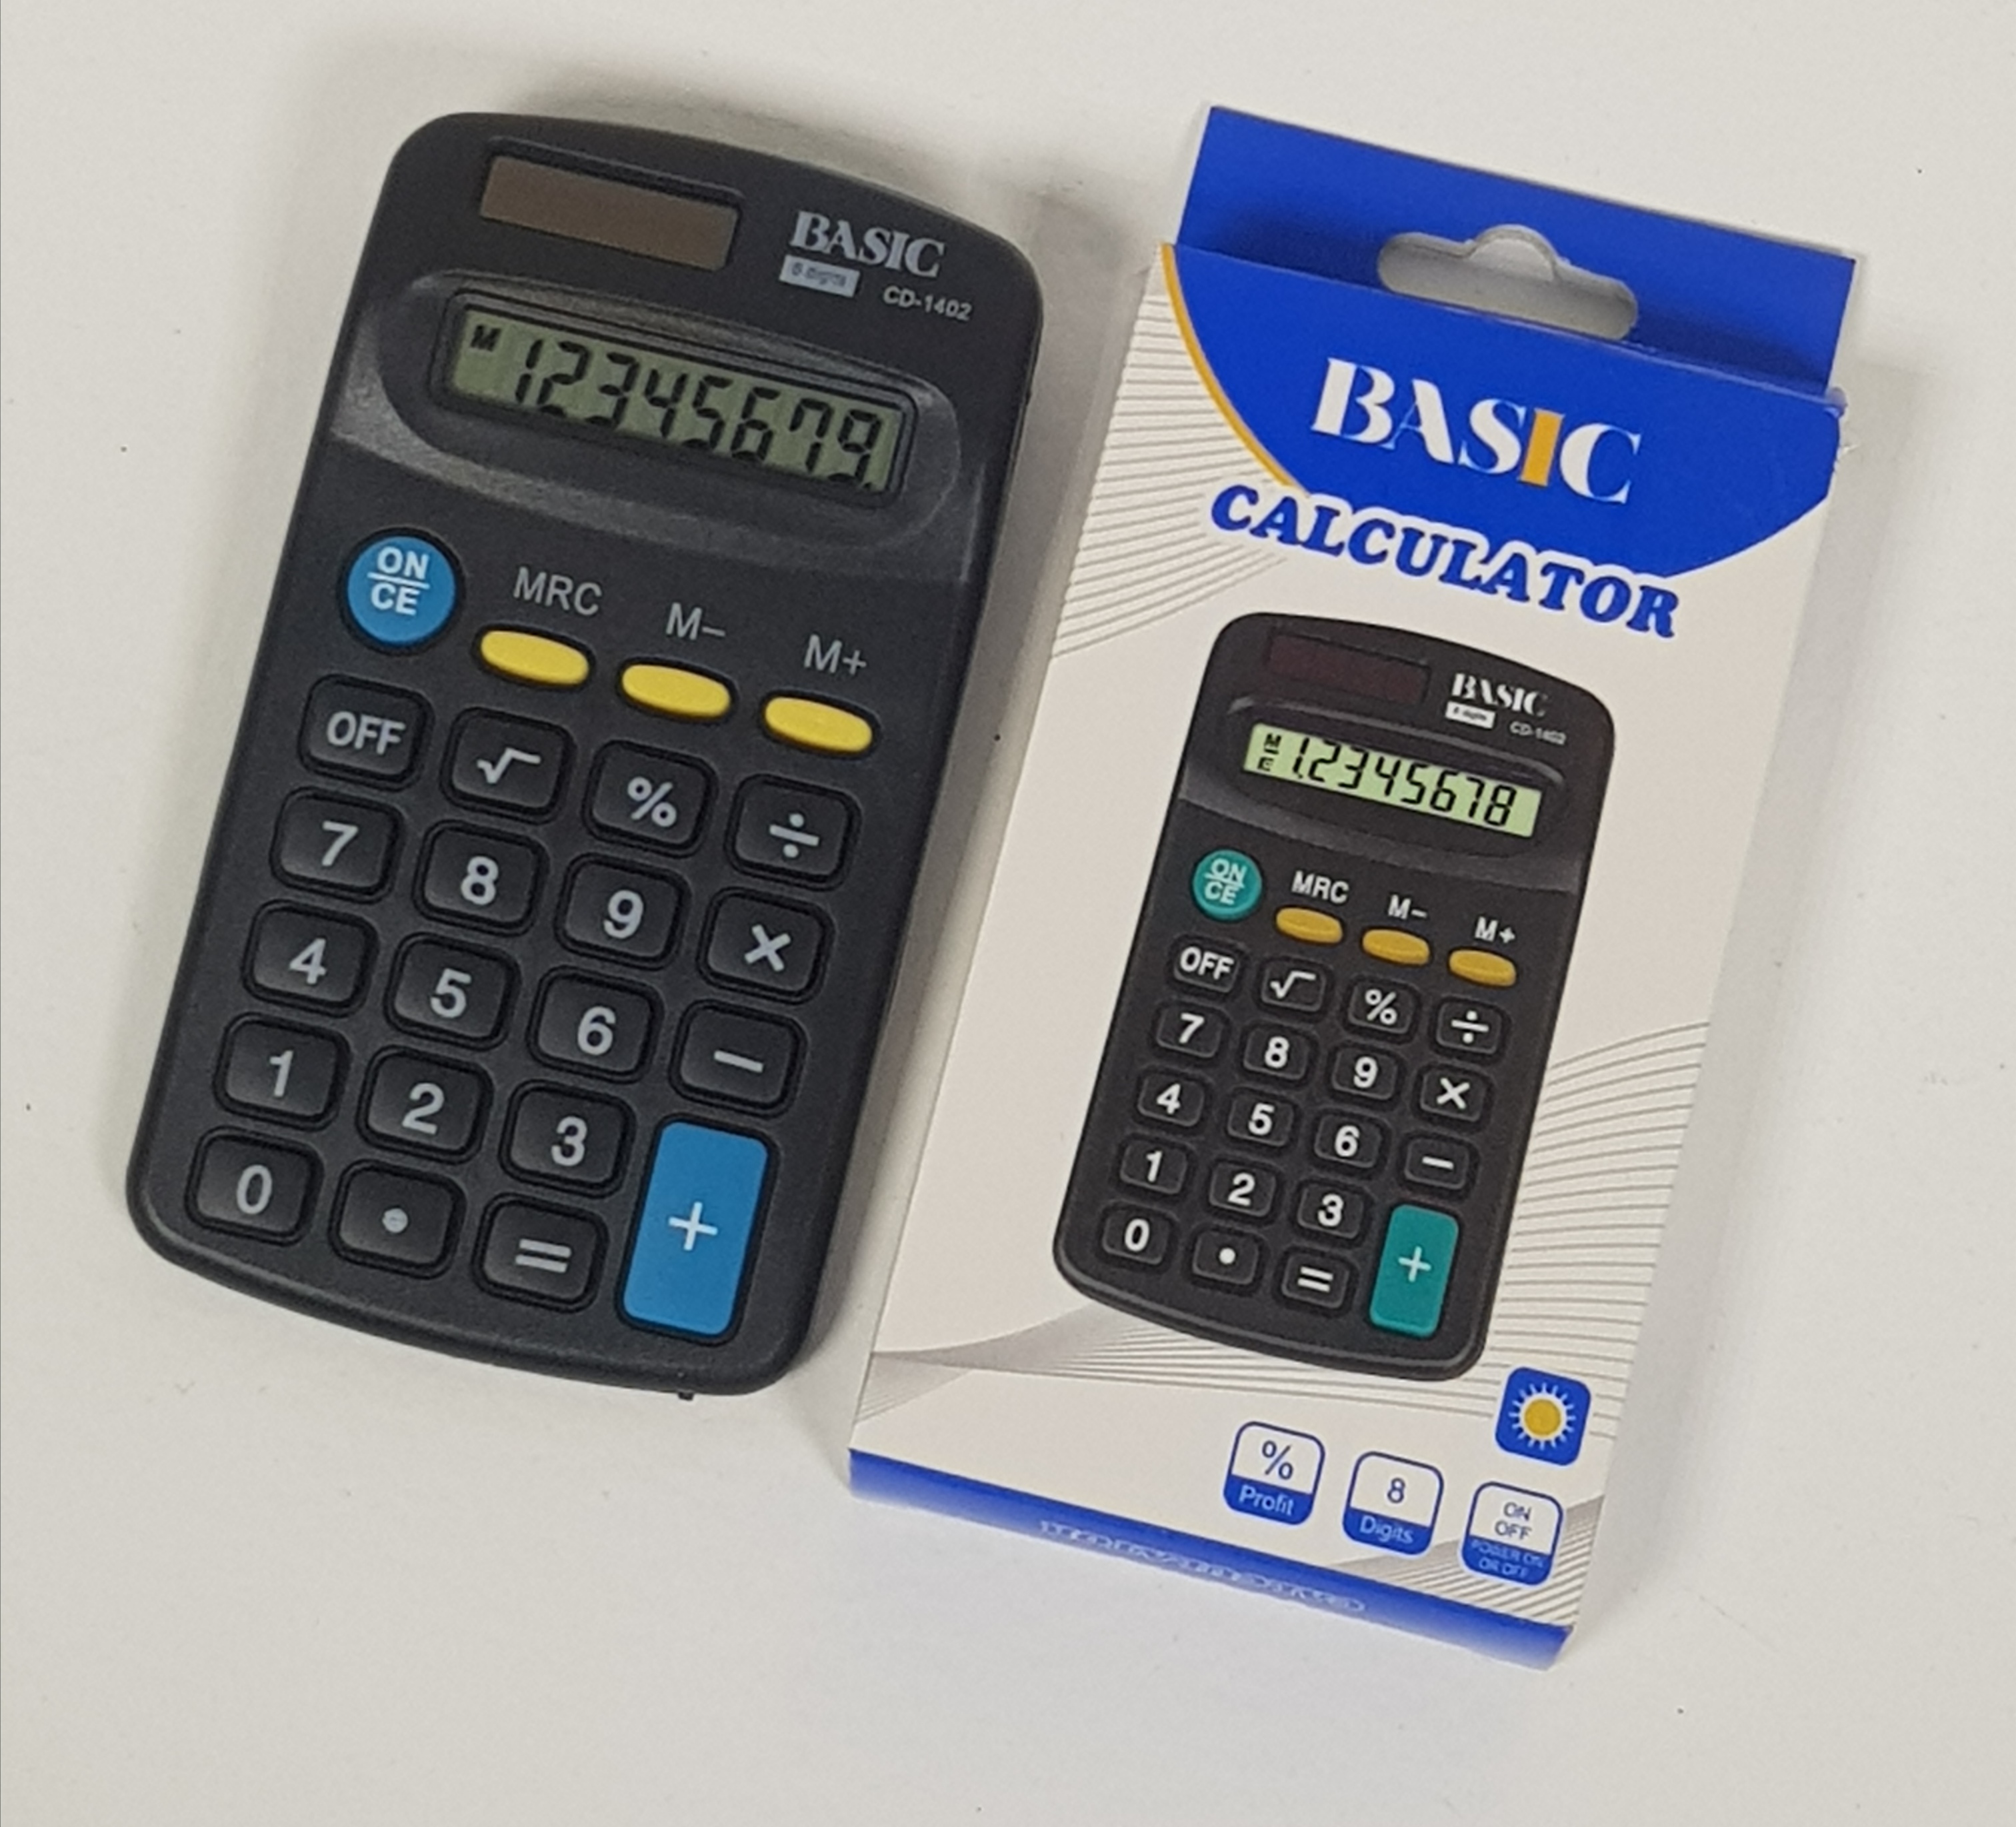 BASIC ماشین حساب مدل CD 1402 (6026)